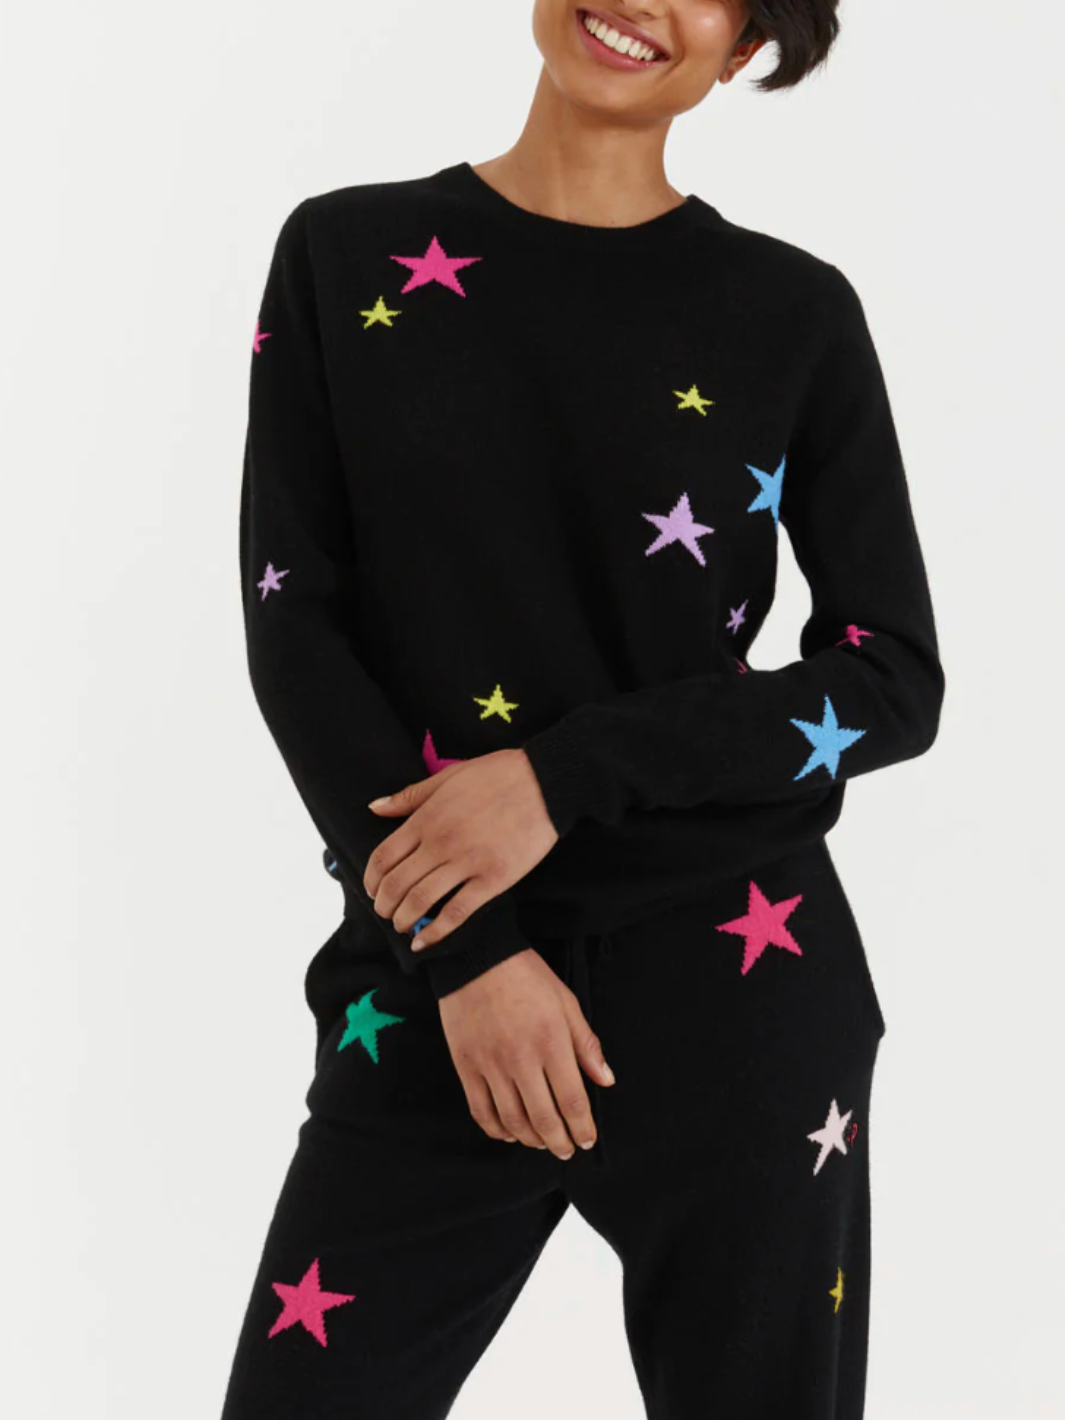 STAR SWEATER IN BLACK / MULTI - Romi Boutique